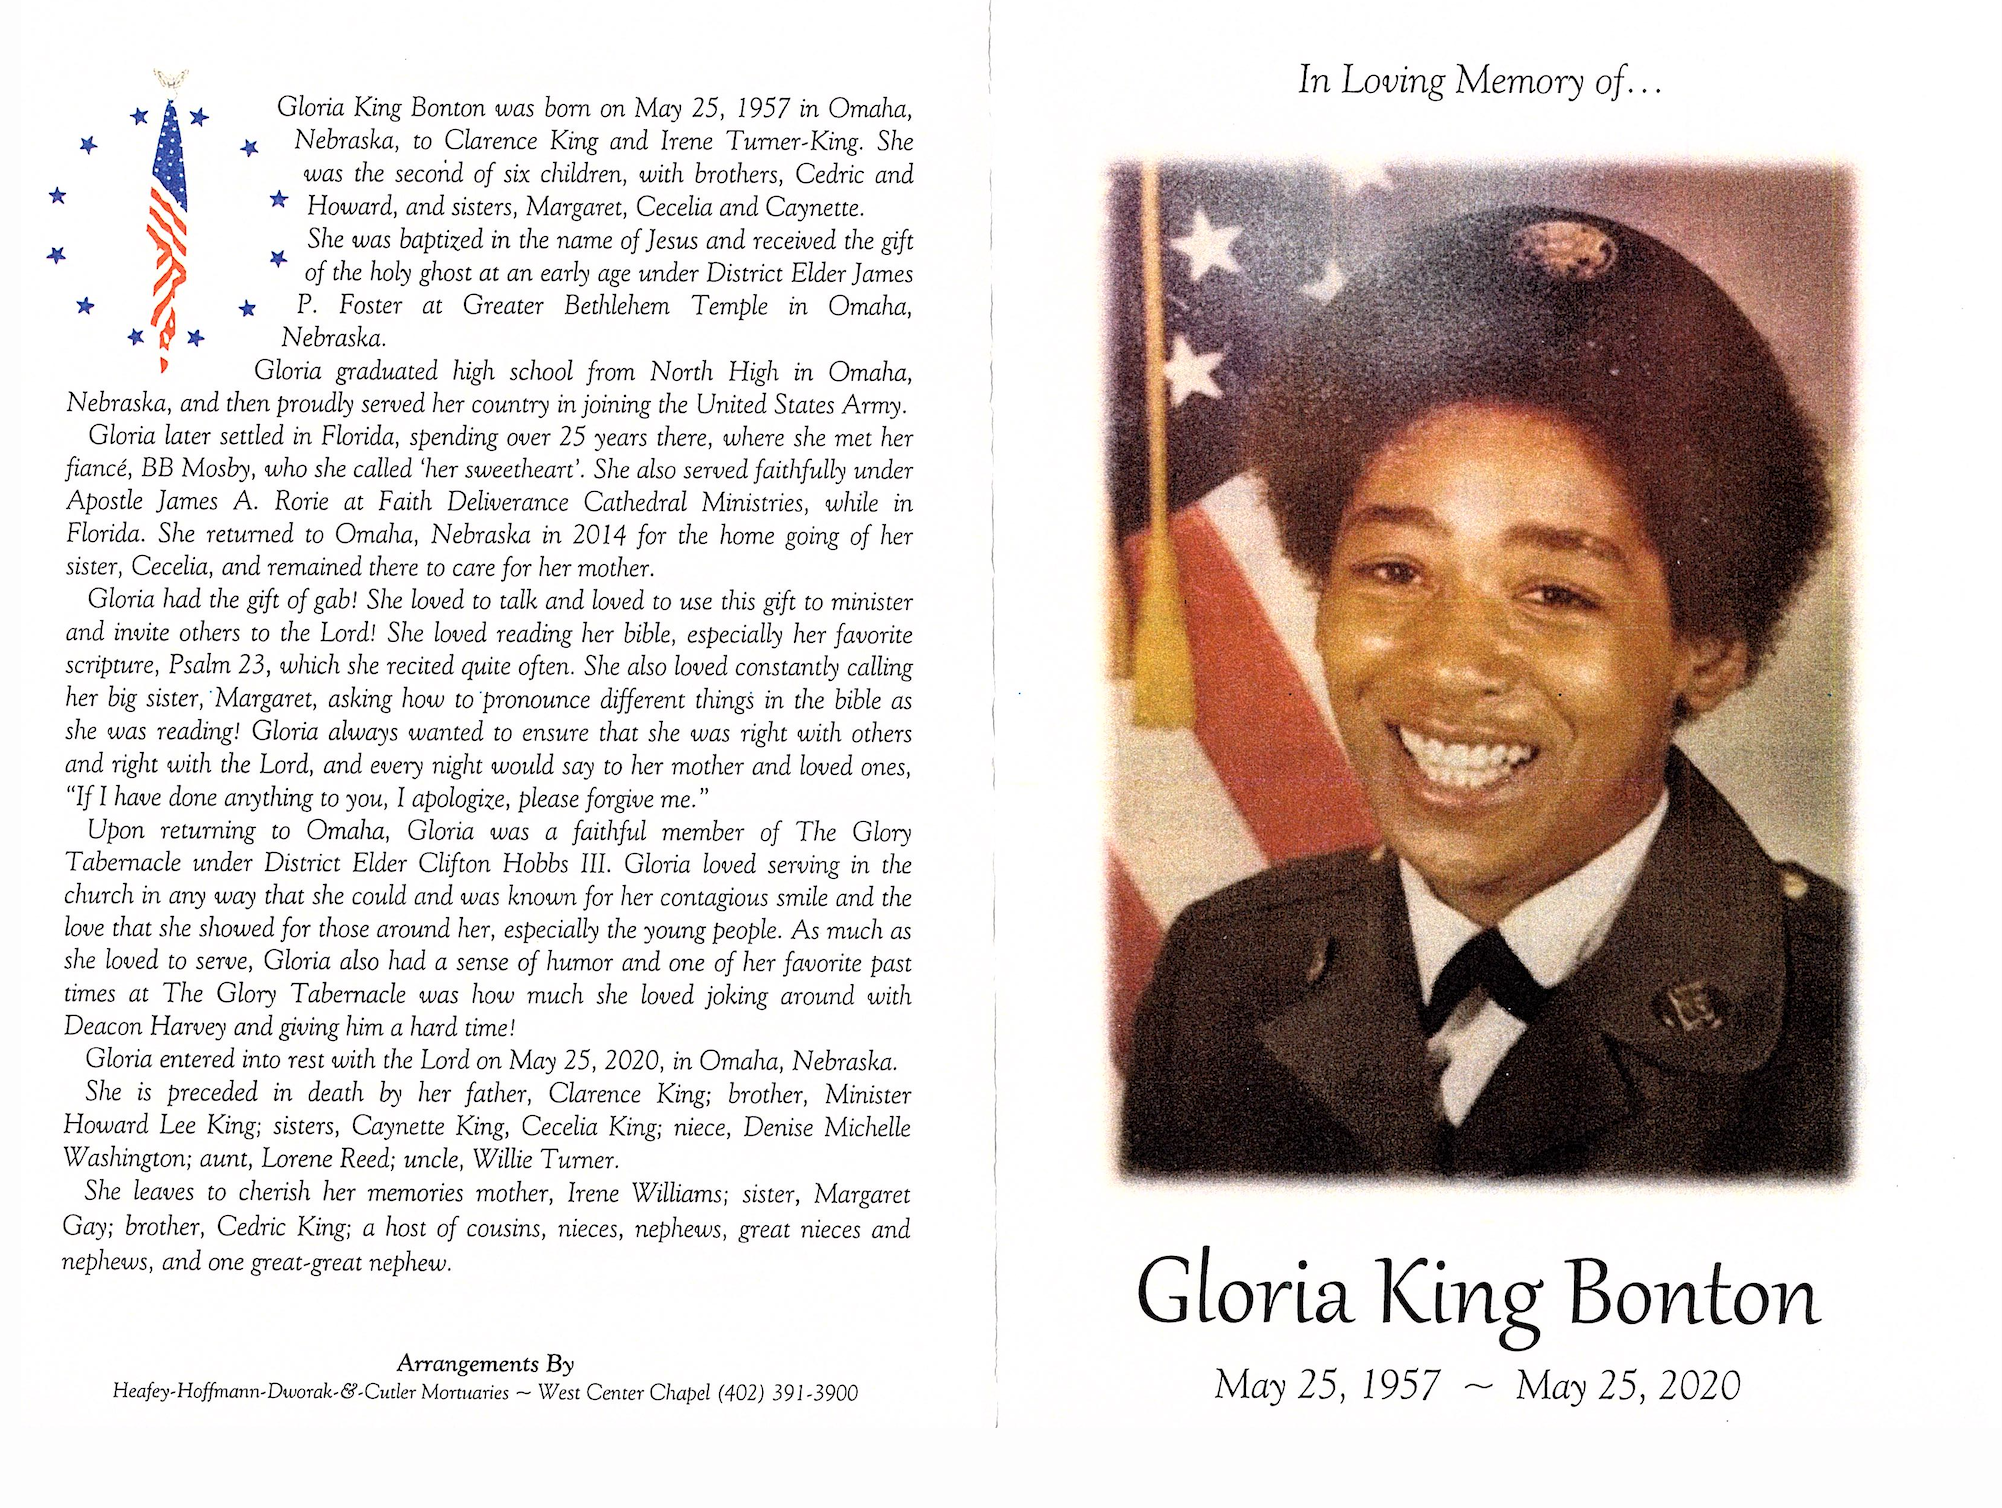 Gloria King Bonton -Shared by Toni Demetria S. 